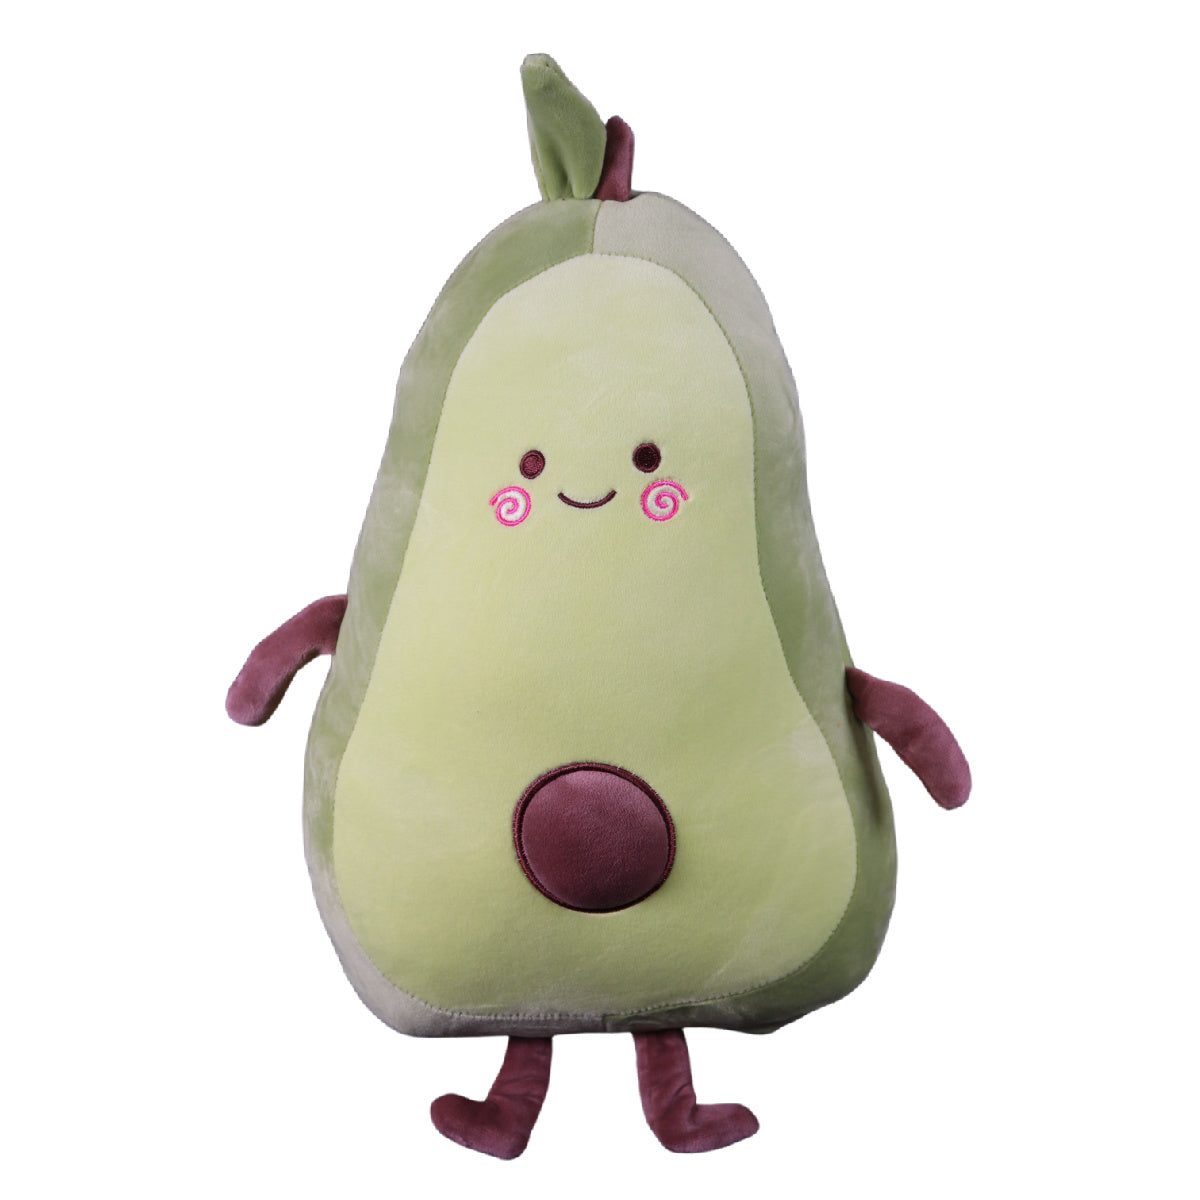 Avocado Plush - Green Avocado Plush Toy